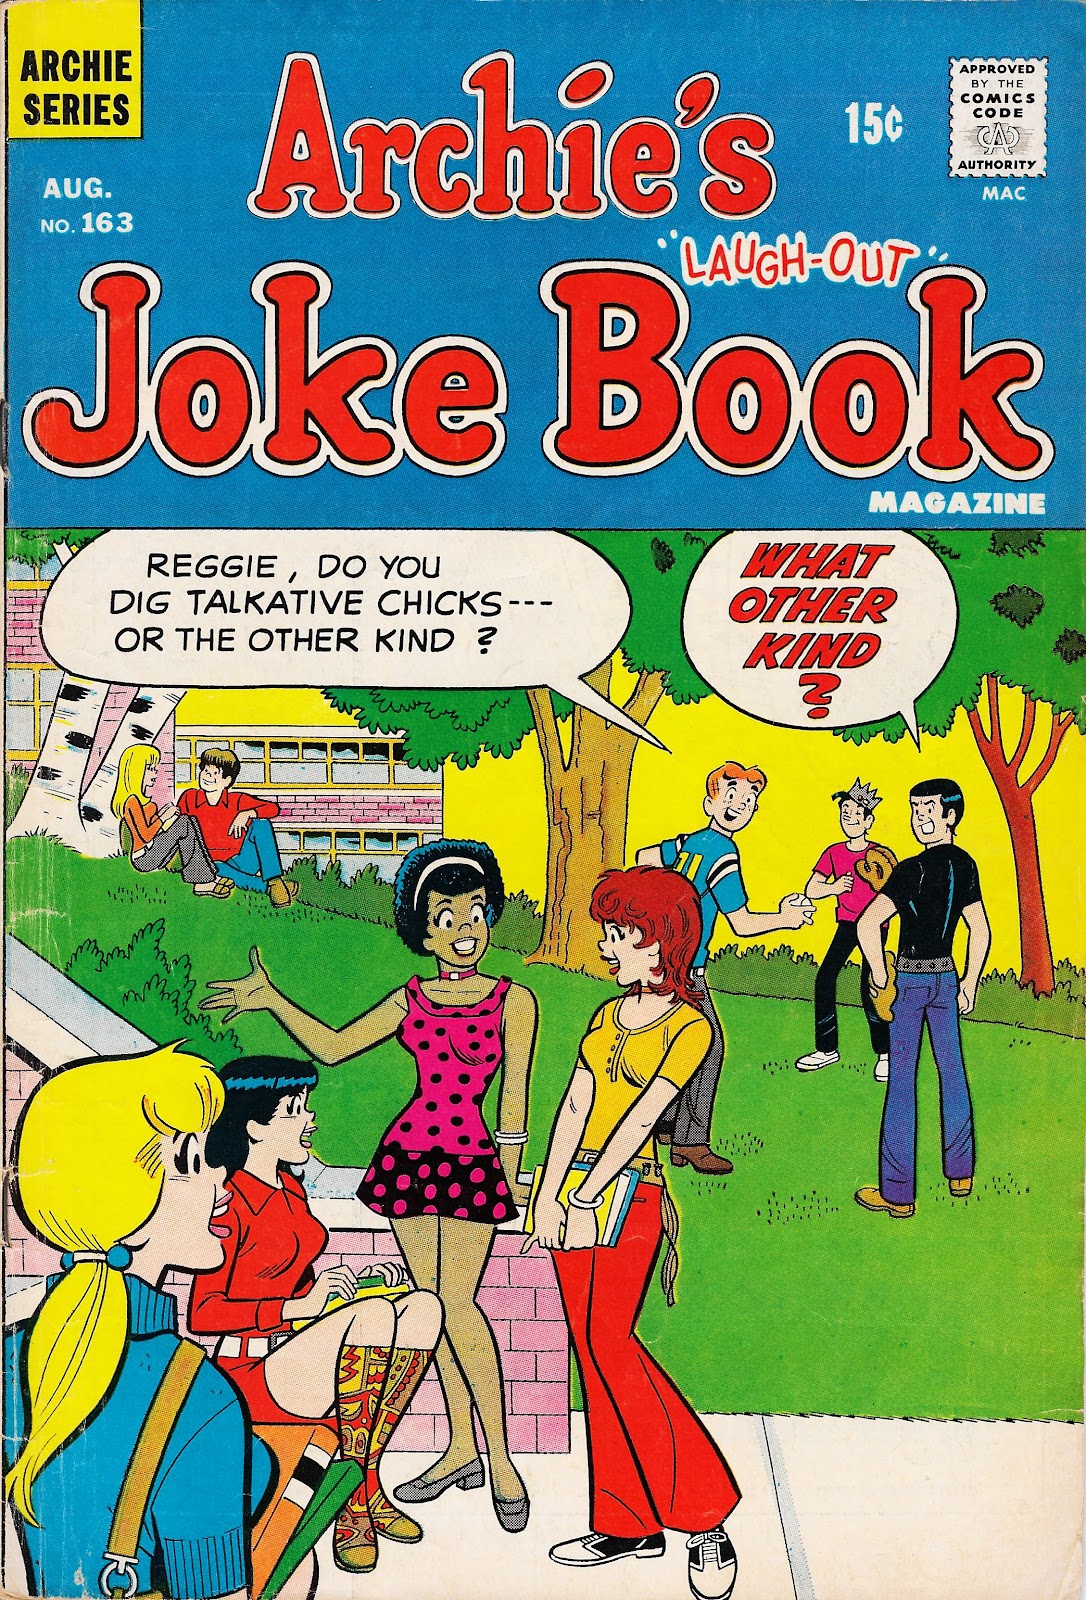 Archie's Joke Book Magazine issue 163 - Page 1